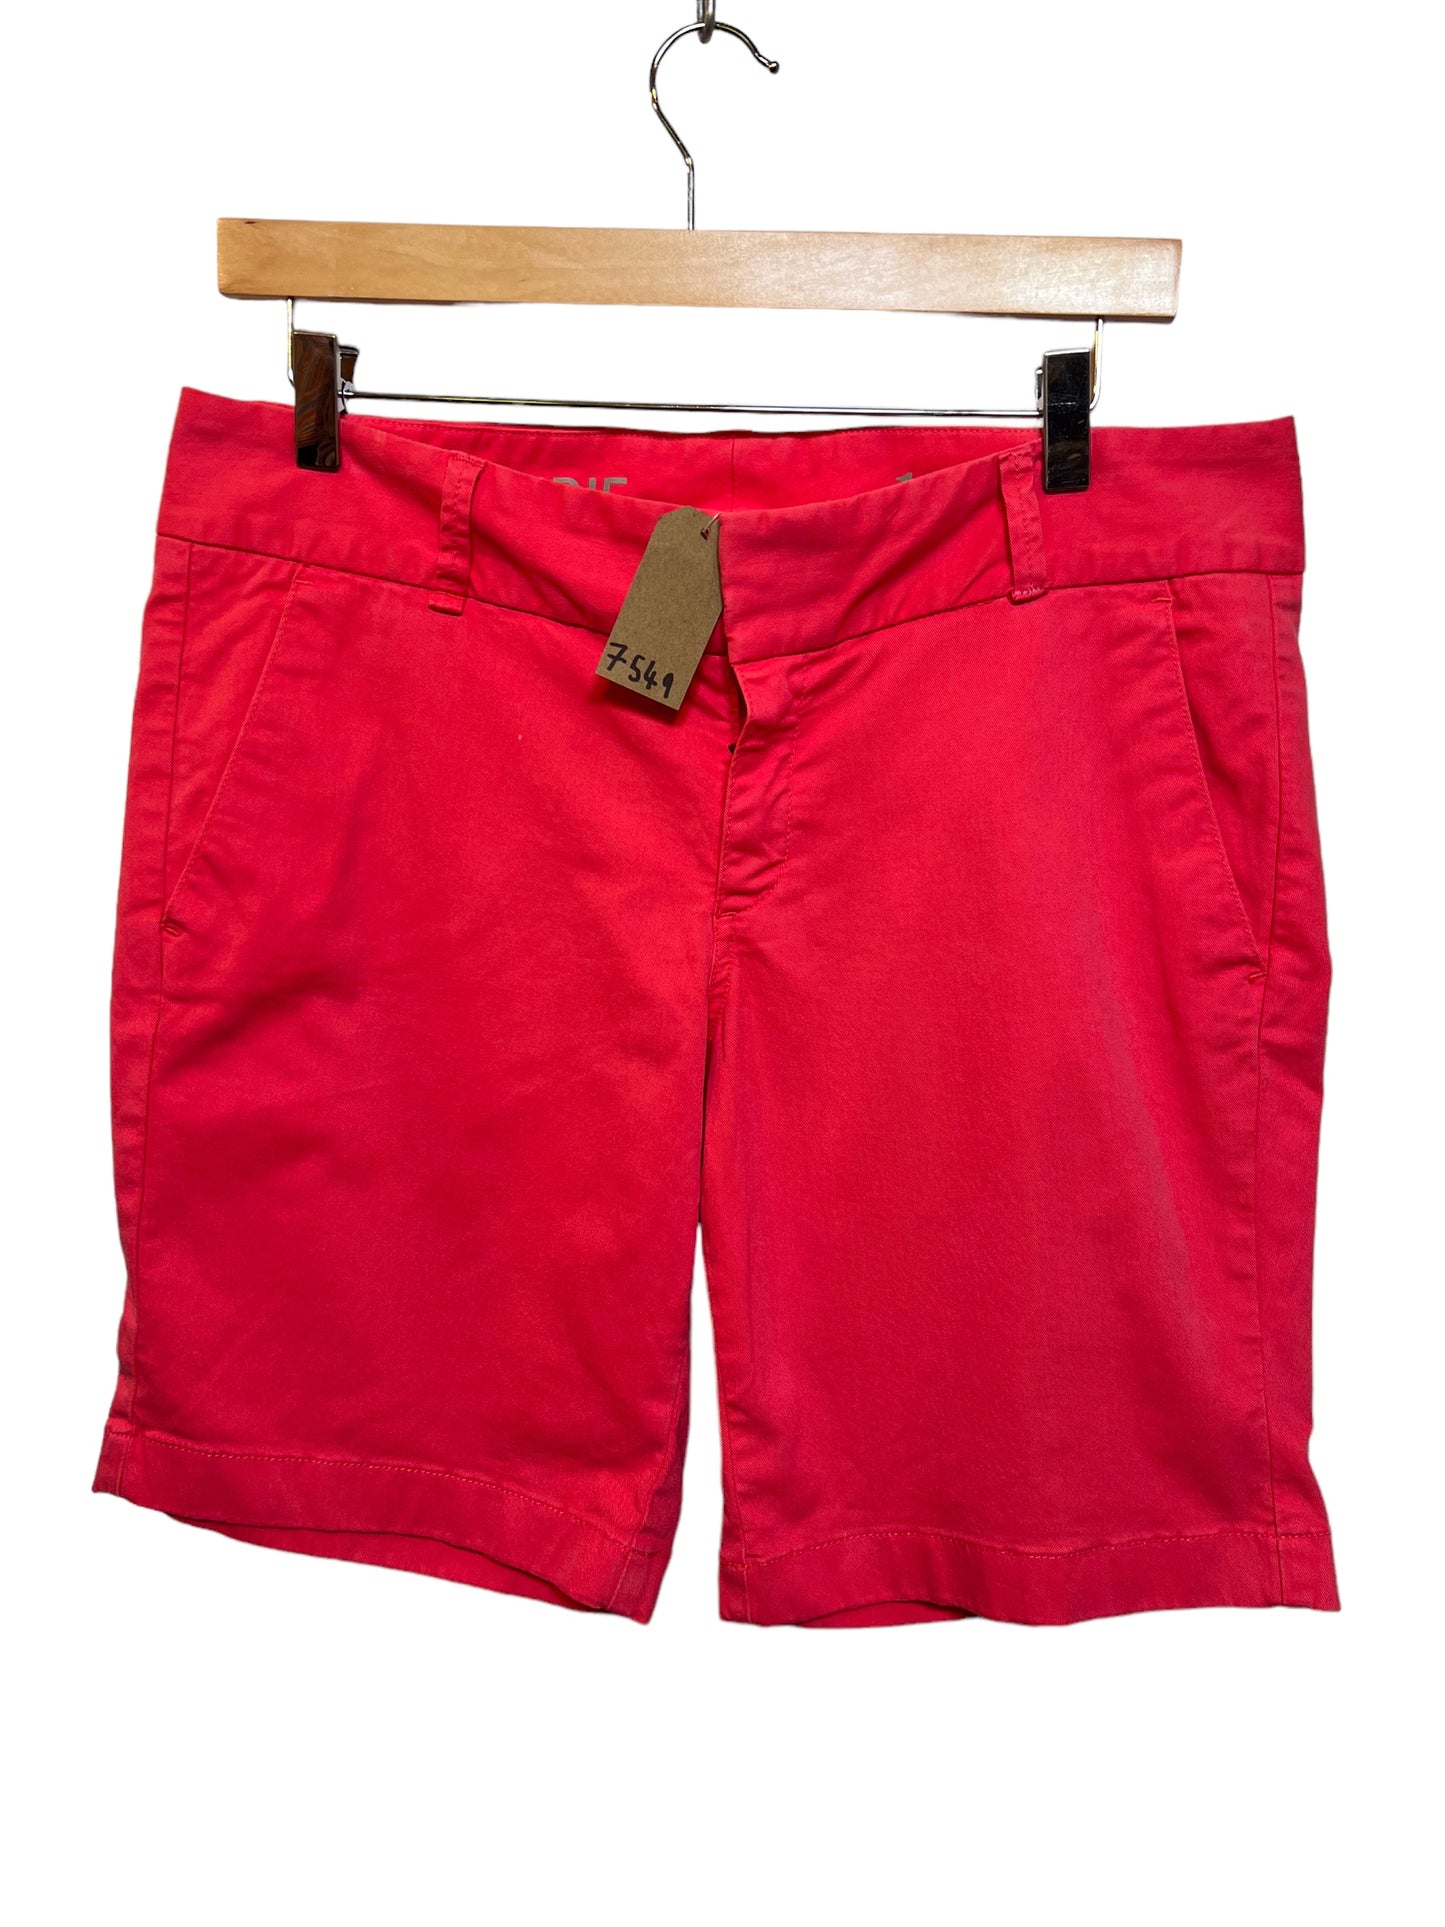 Red Chino Shorts (Size XL)